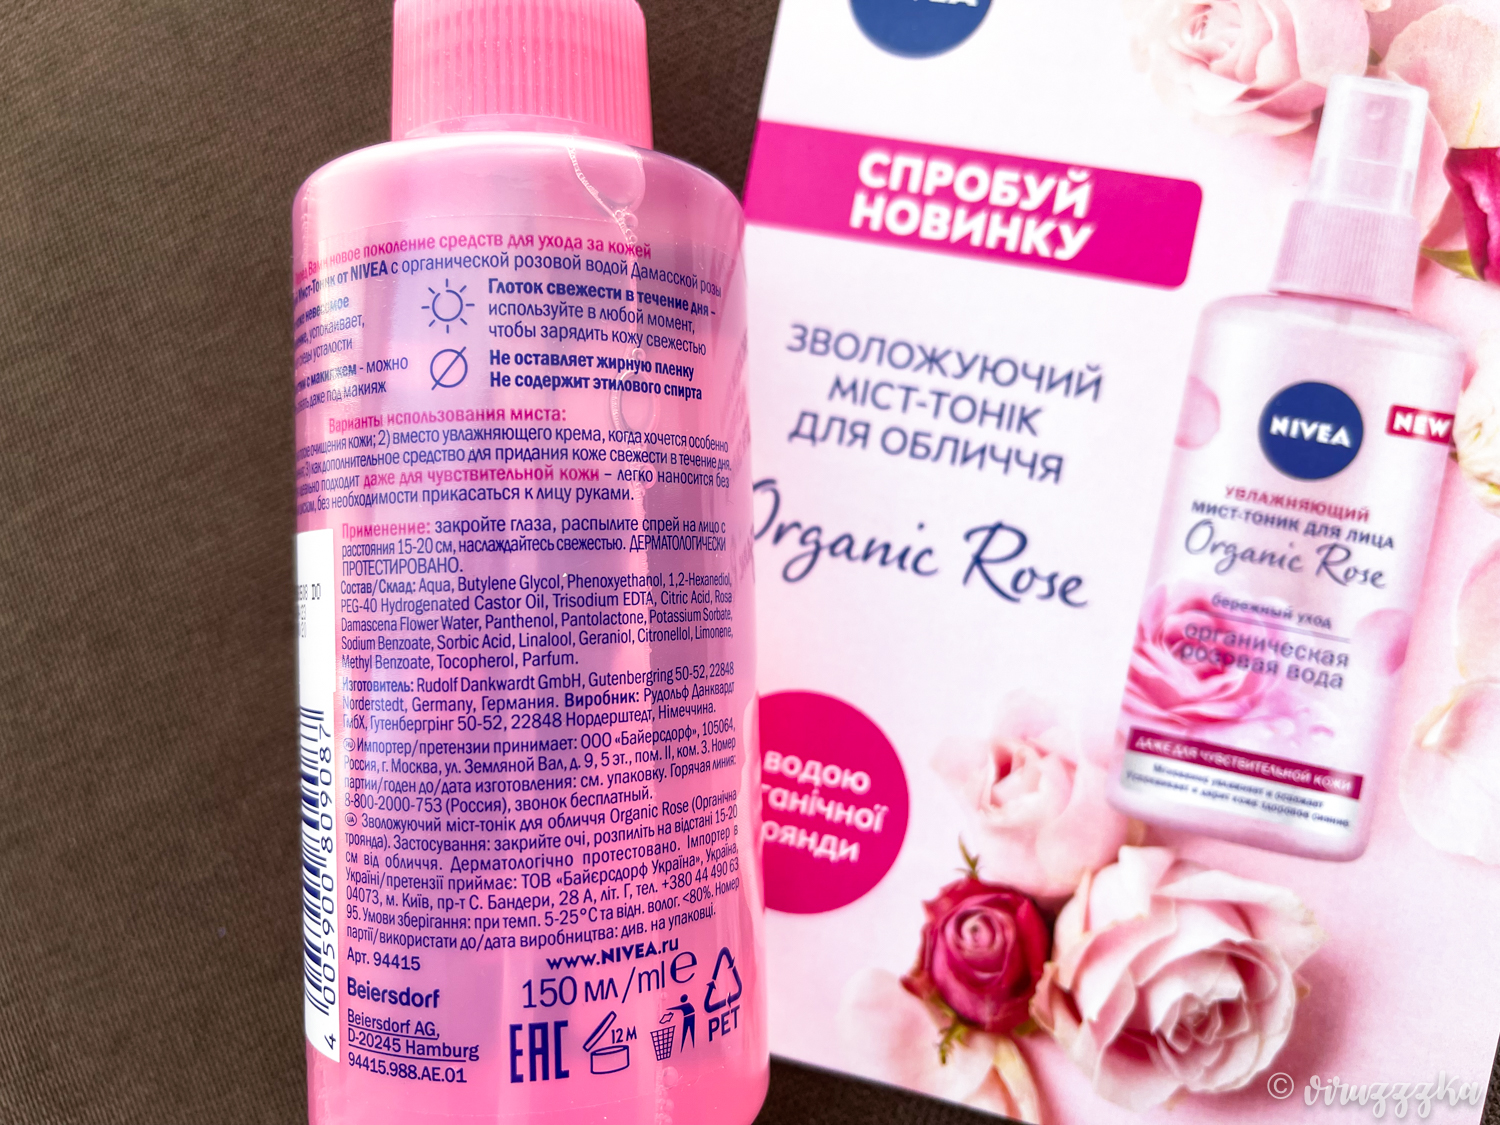 Nivea Organic Rose Face Mist Review Ingredients